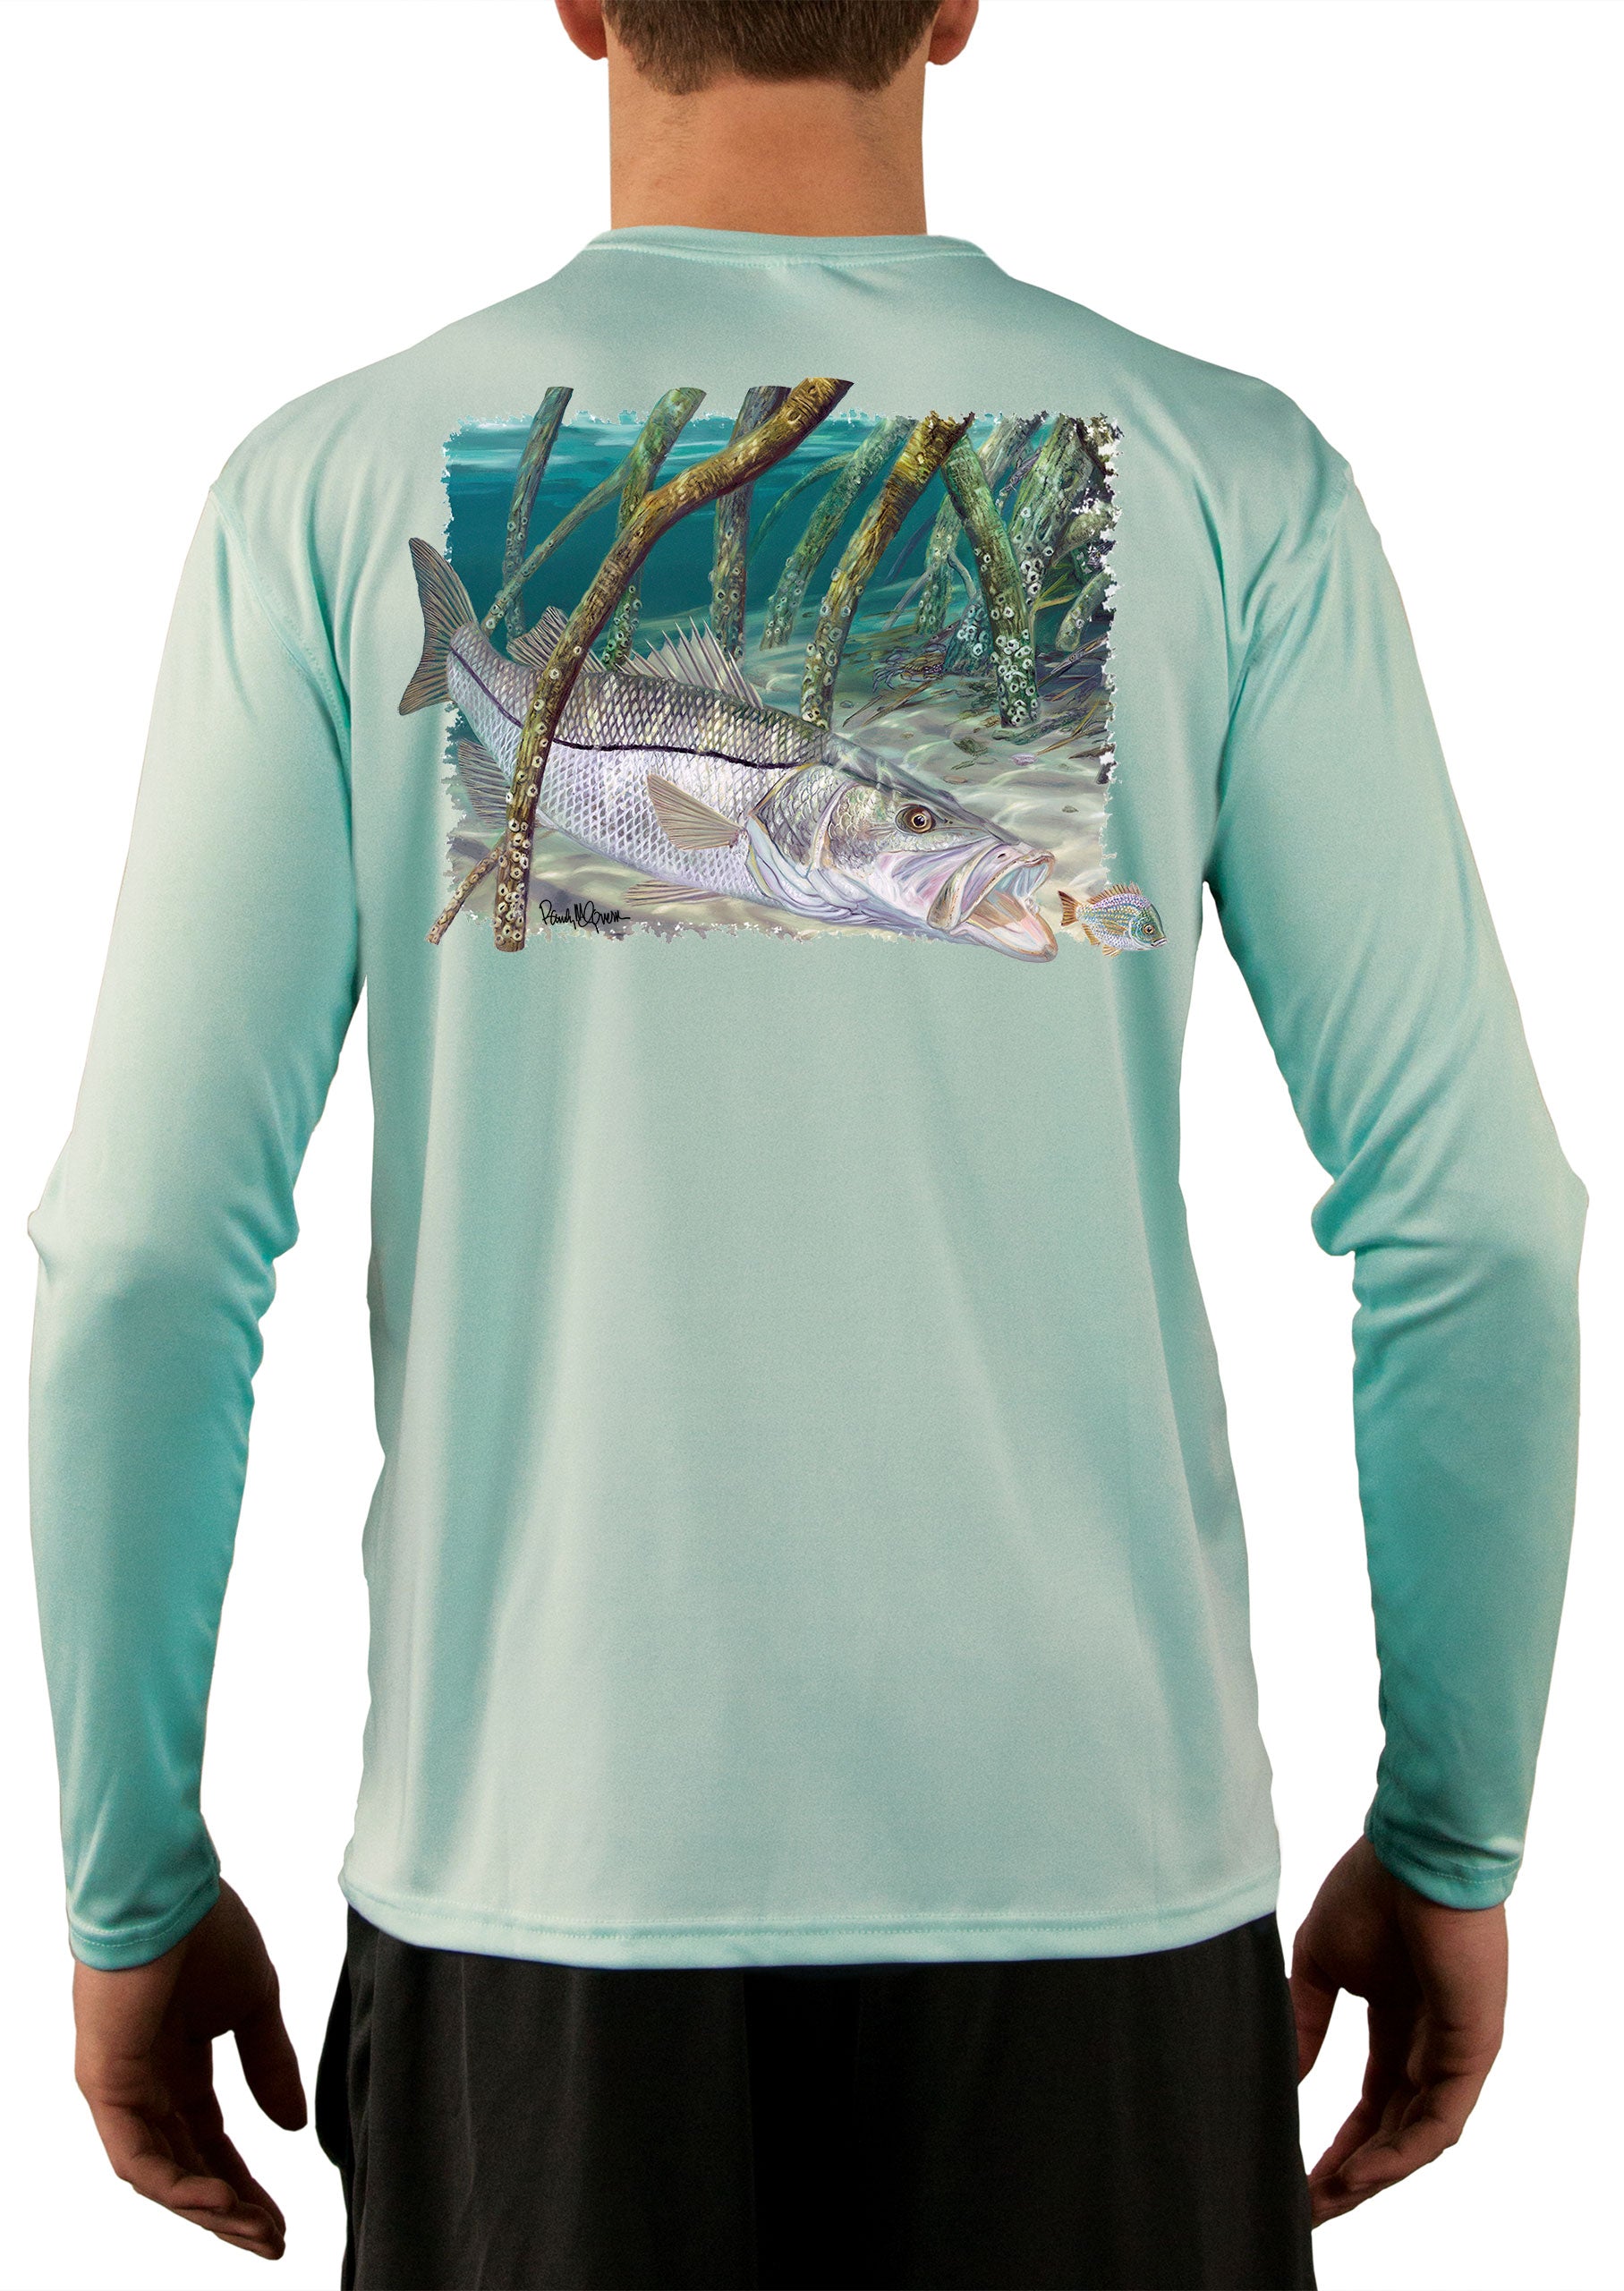 Fishing Shirts For Men Snook Fish in Mangroves by Award Winning